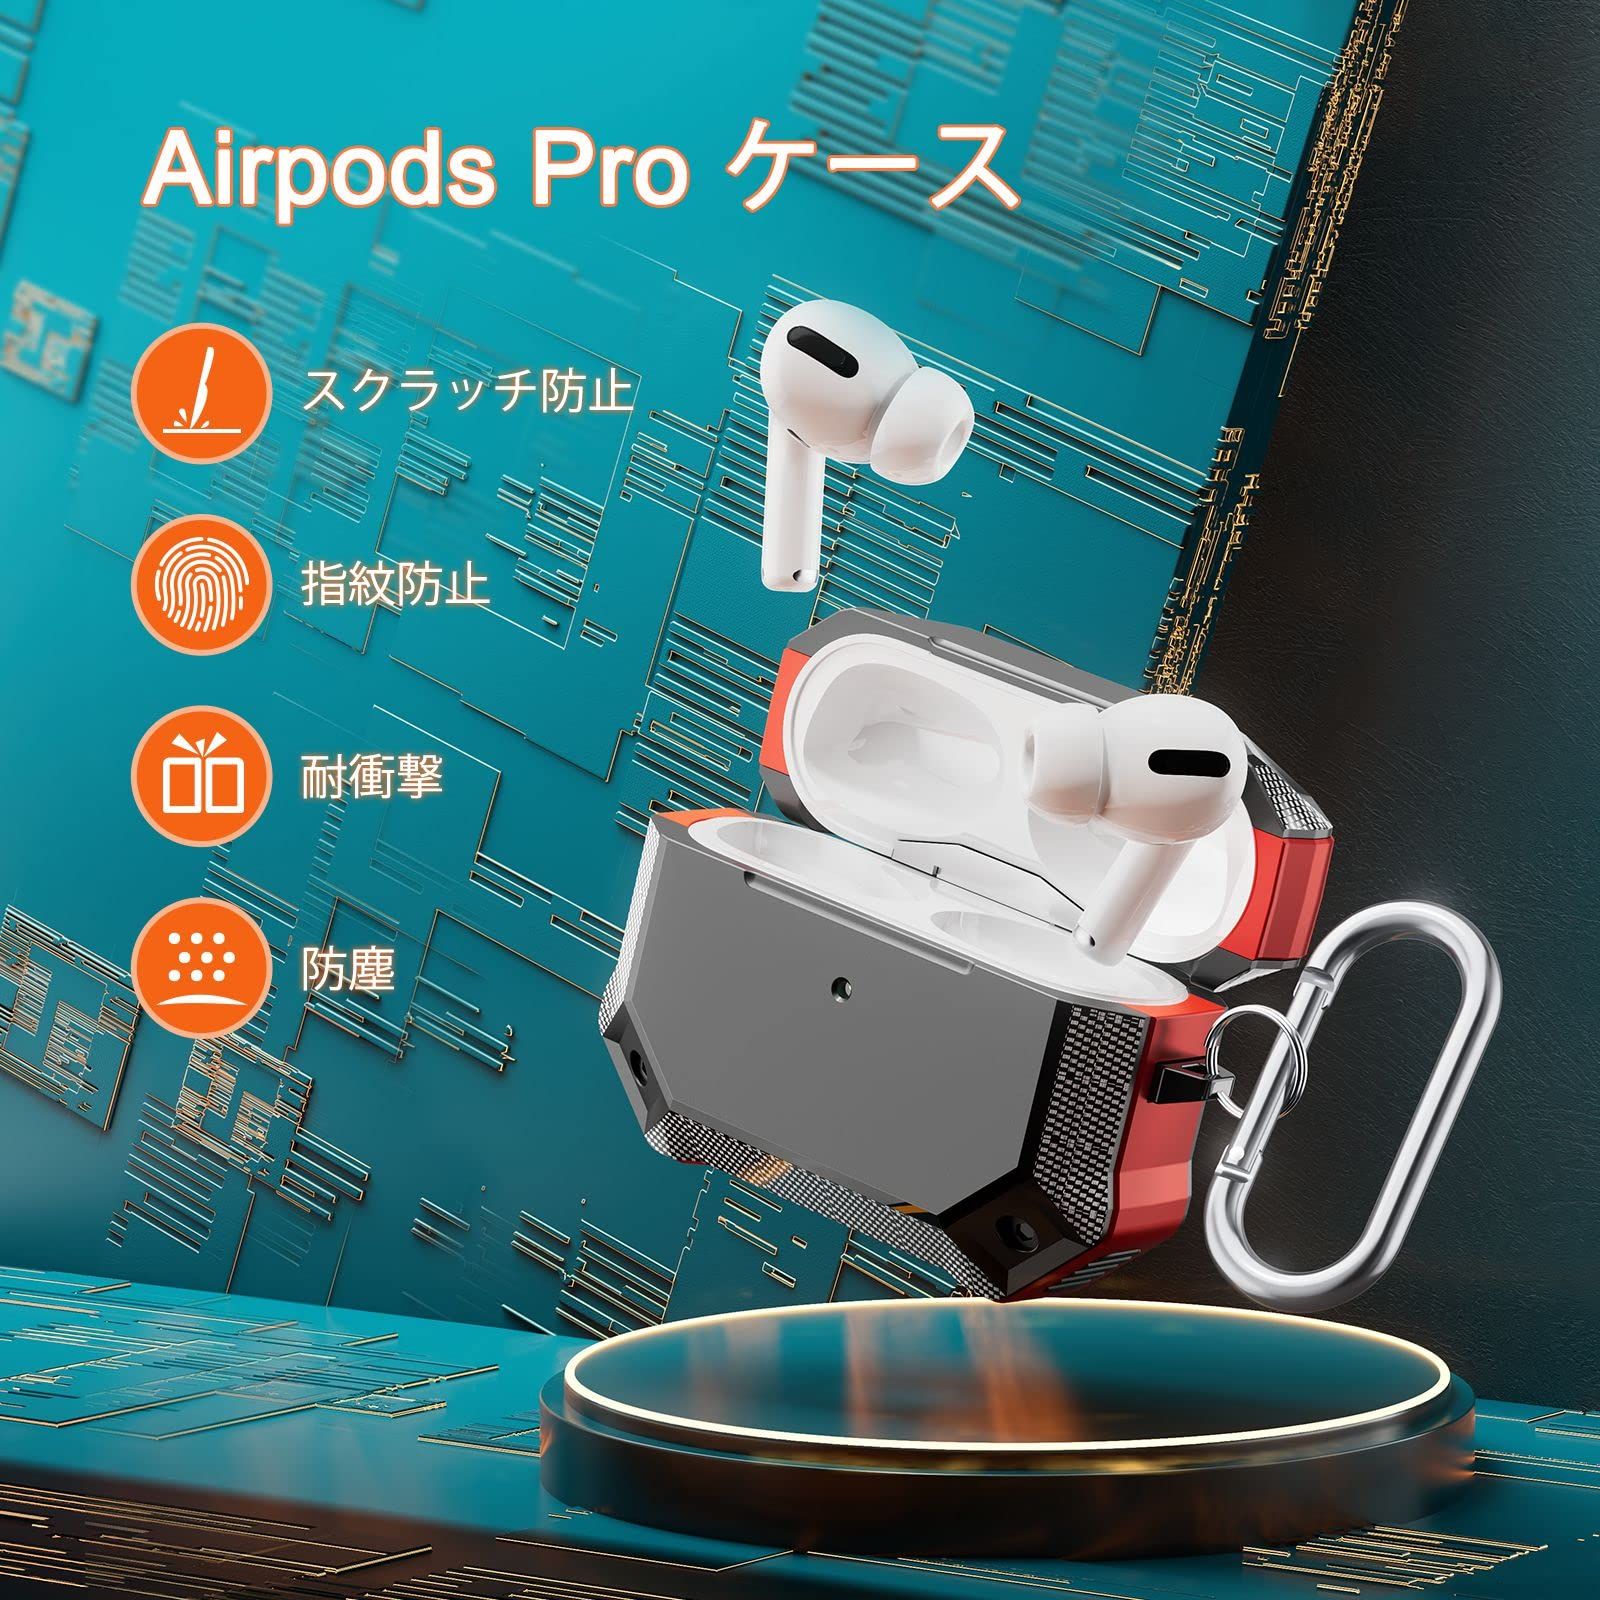 AirPods Pro ケース 機械型 TPU素材 耐衝撃 防塵 カラビナ付き